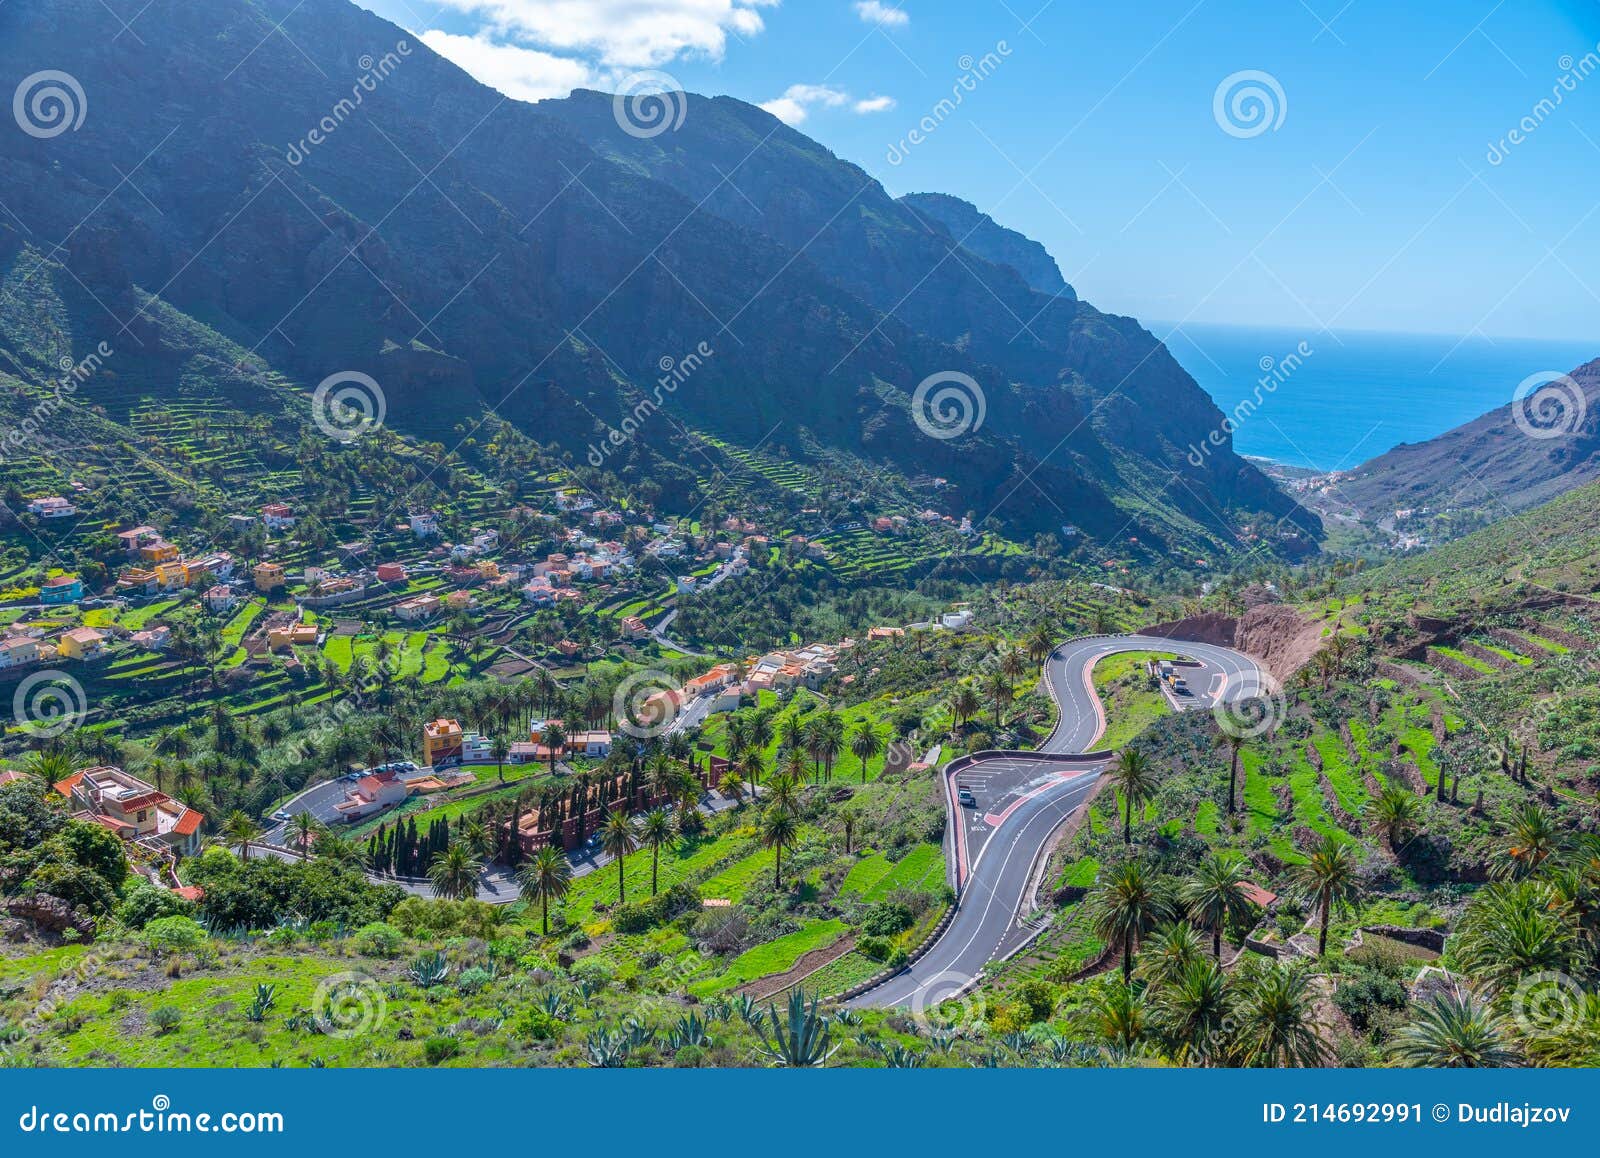 aerial view of valle gran rey valley at la gomera, canary islands, spain